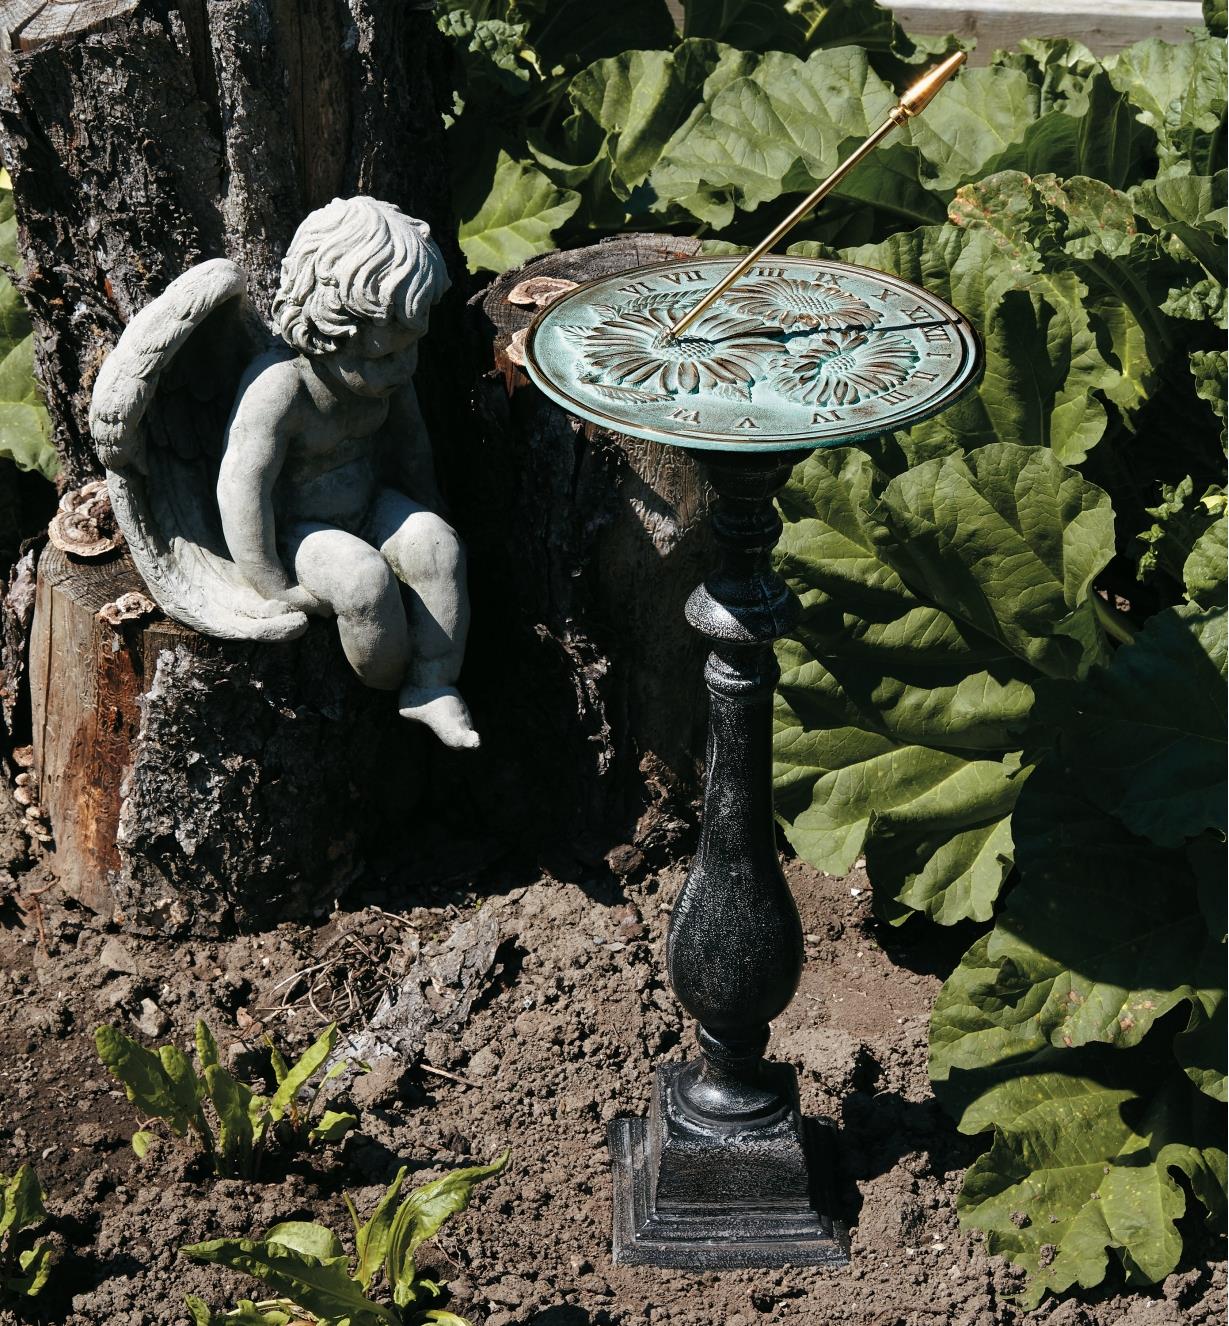 Flowers sundial and pedestal in a garden